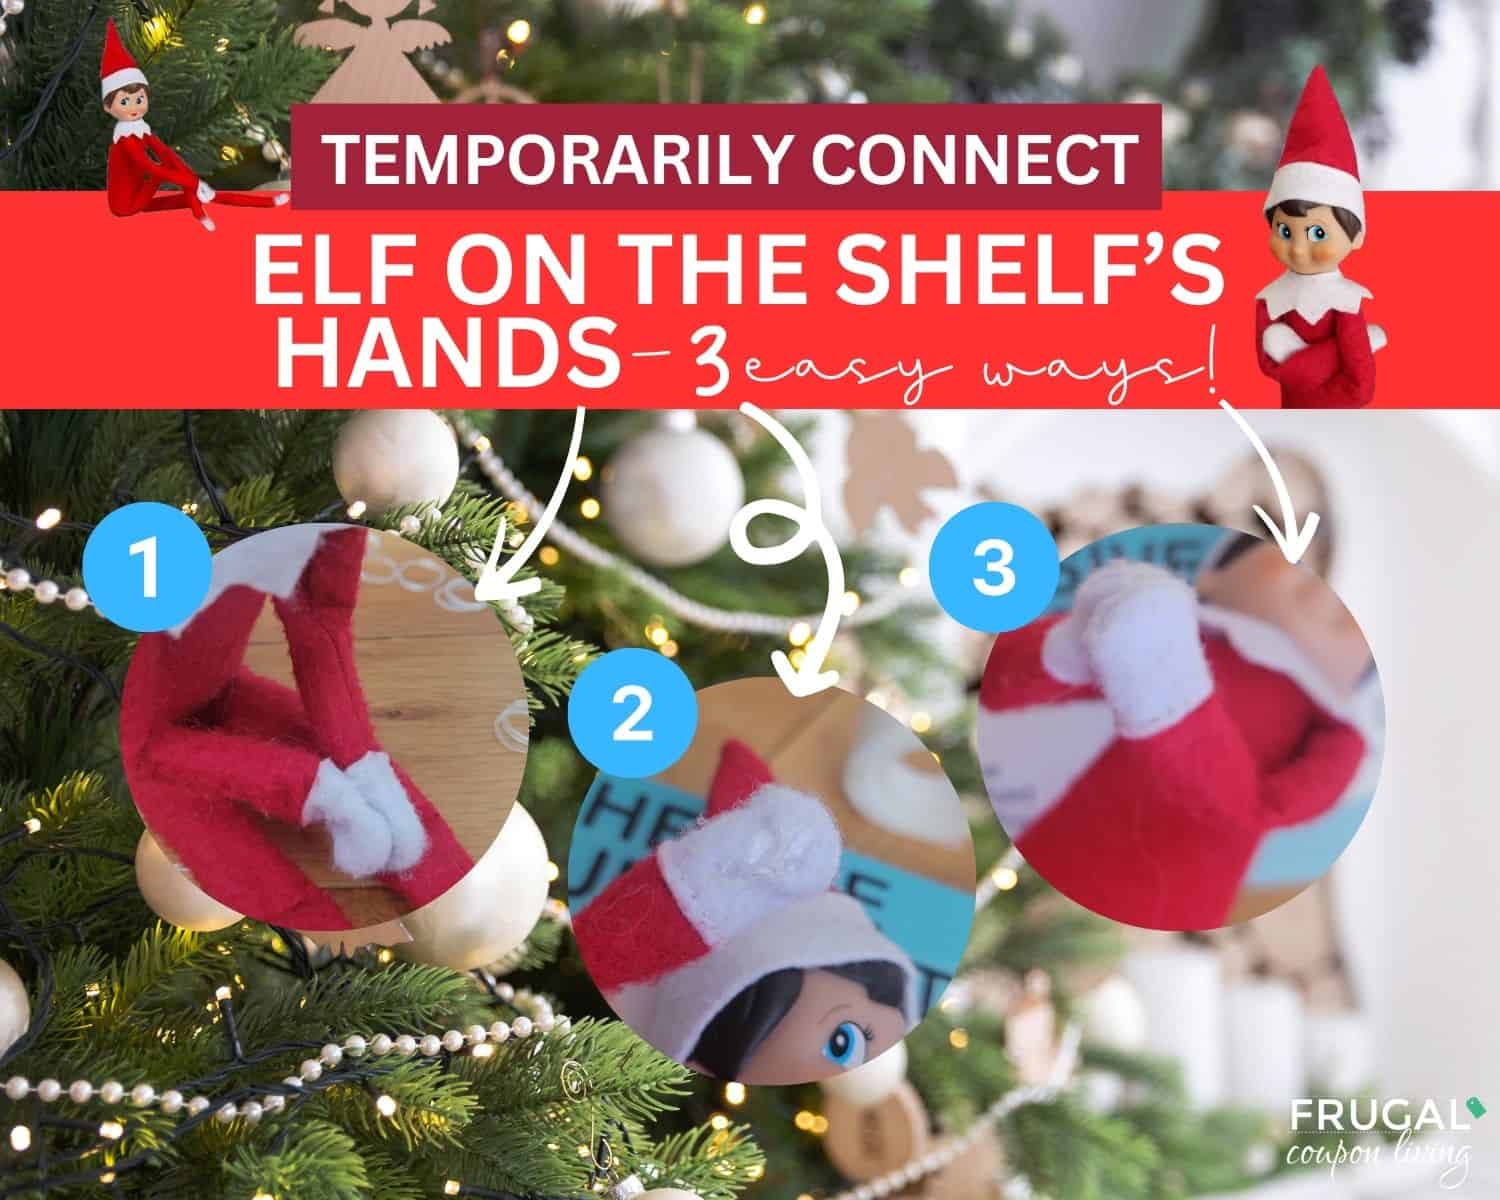 elf on the shelf hands connected together velcro, rubber bands, glue